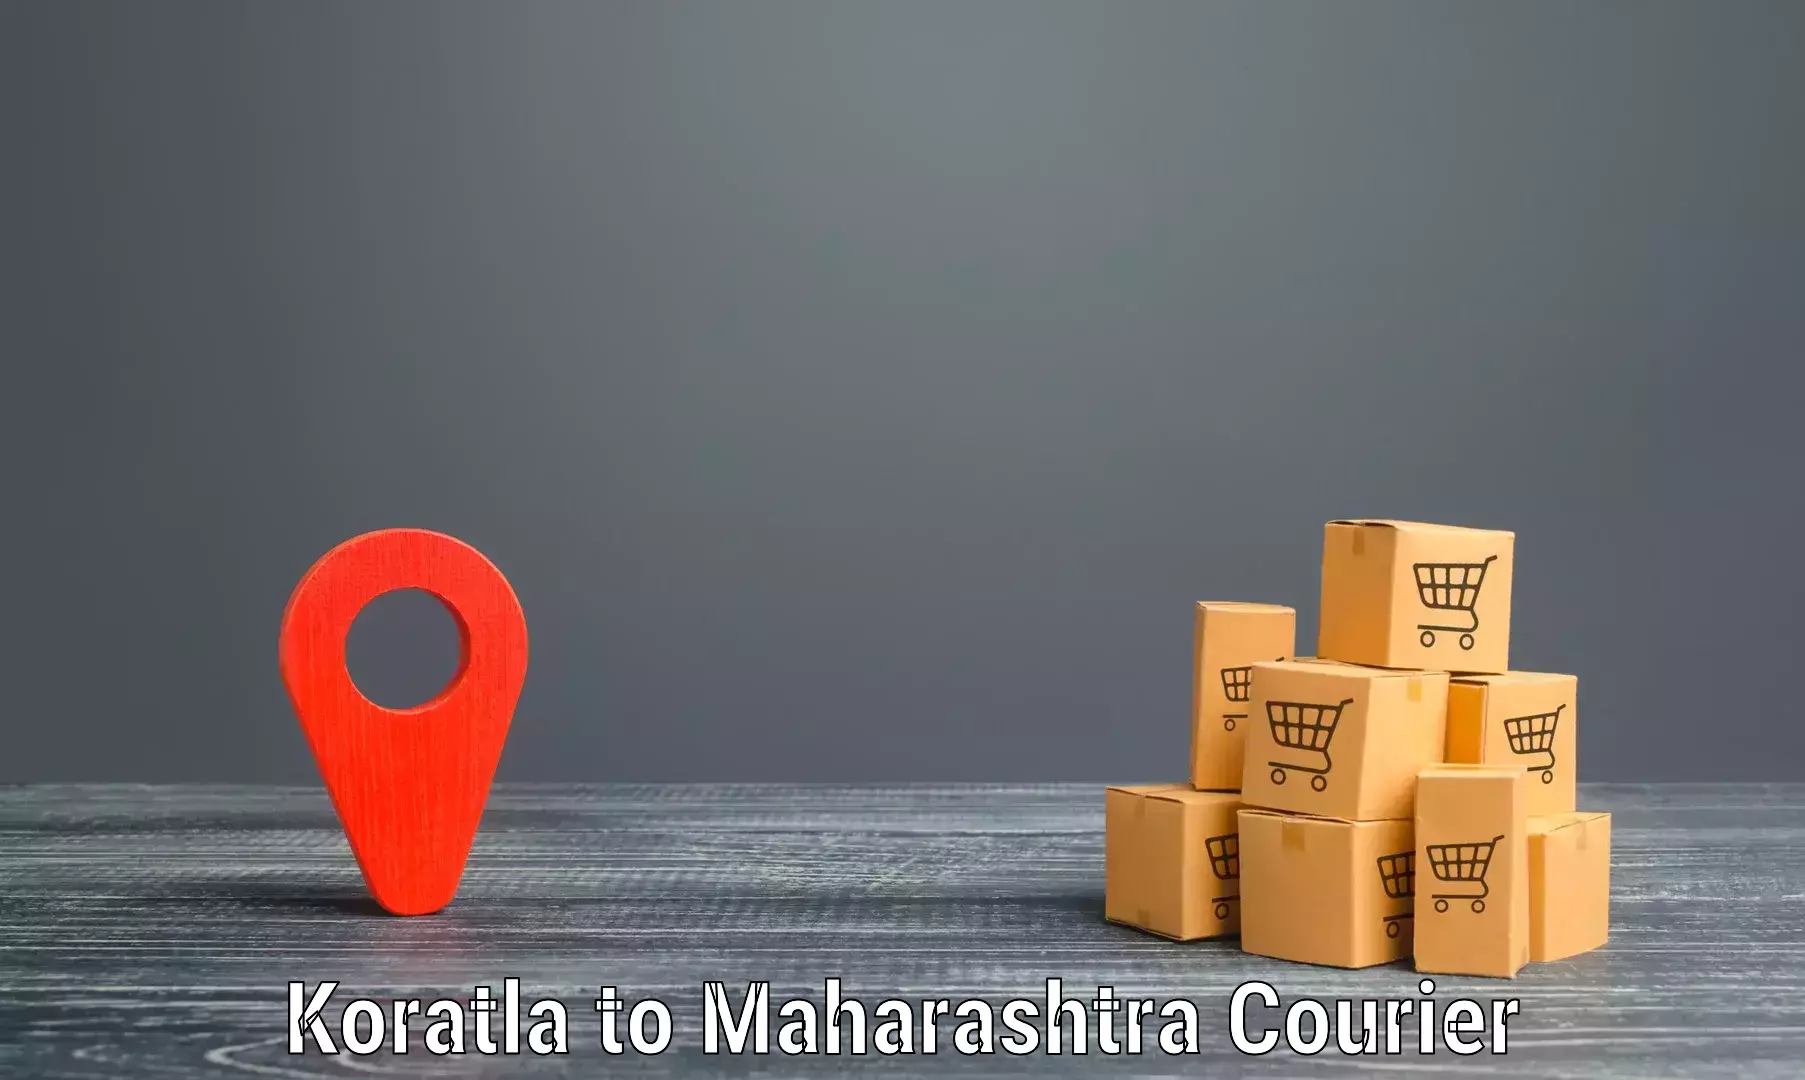 Reliable freight solutions in Koratla to Maharashtra